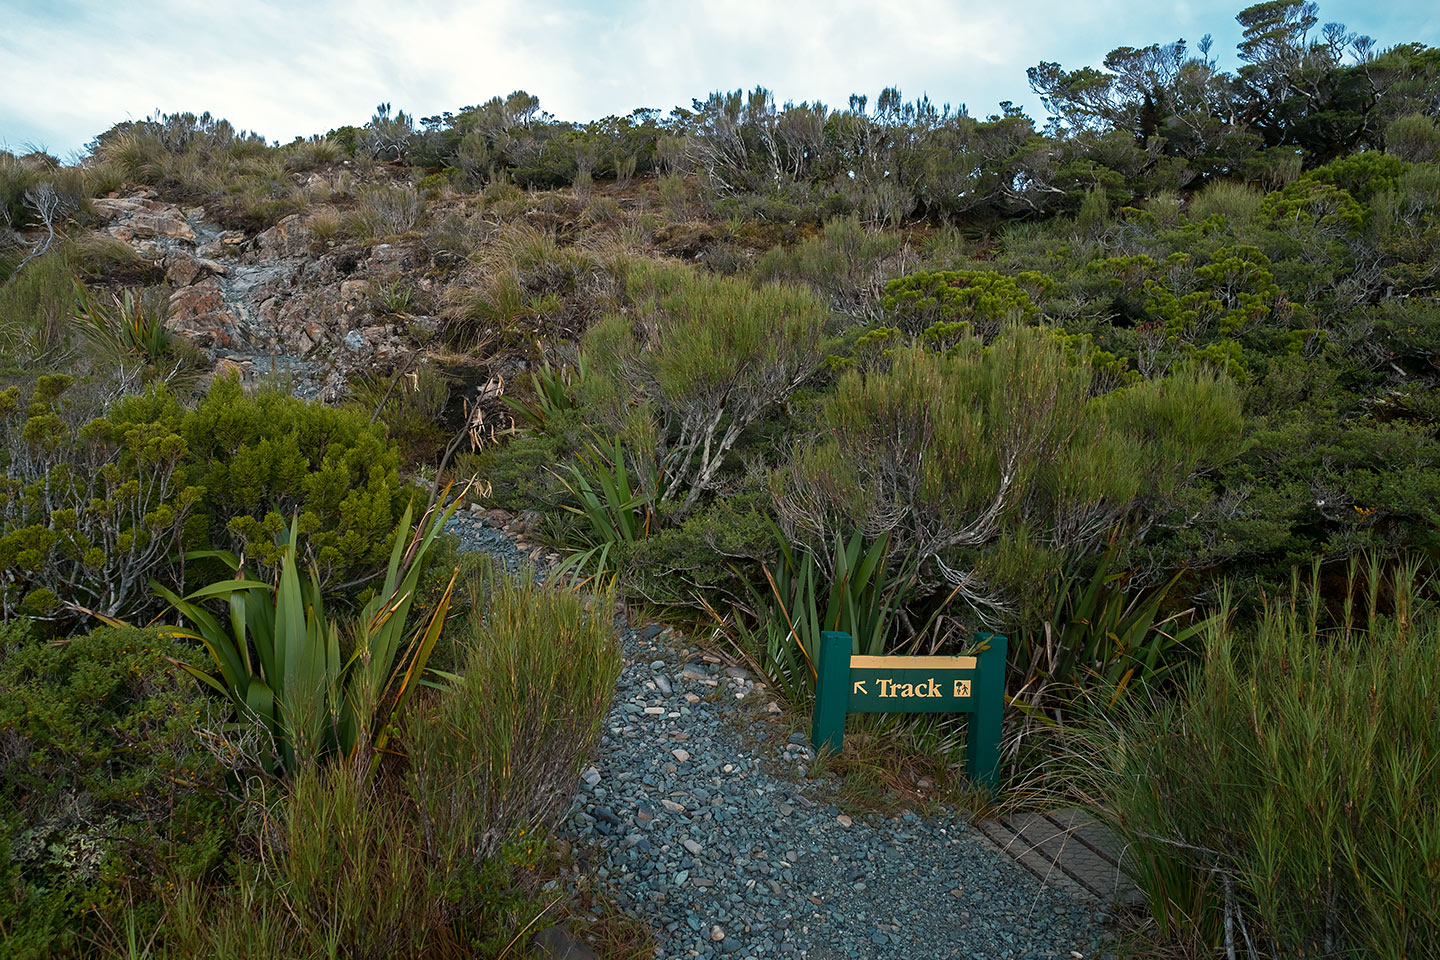 Routeburn Track, Mount Aspiring National Park and Fiordland National Park, New Zealand